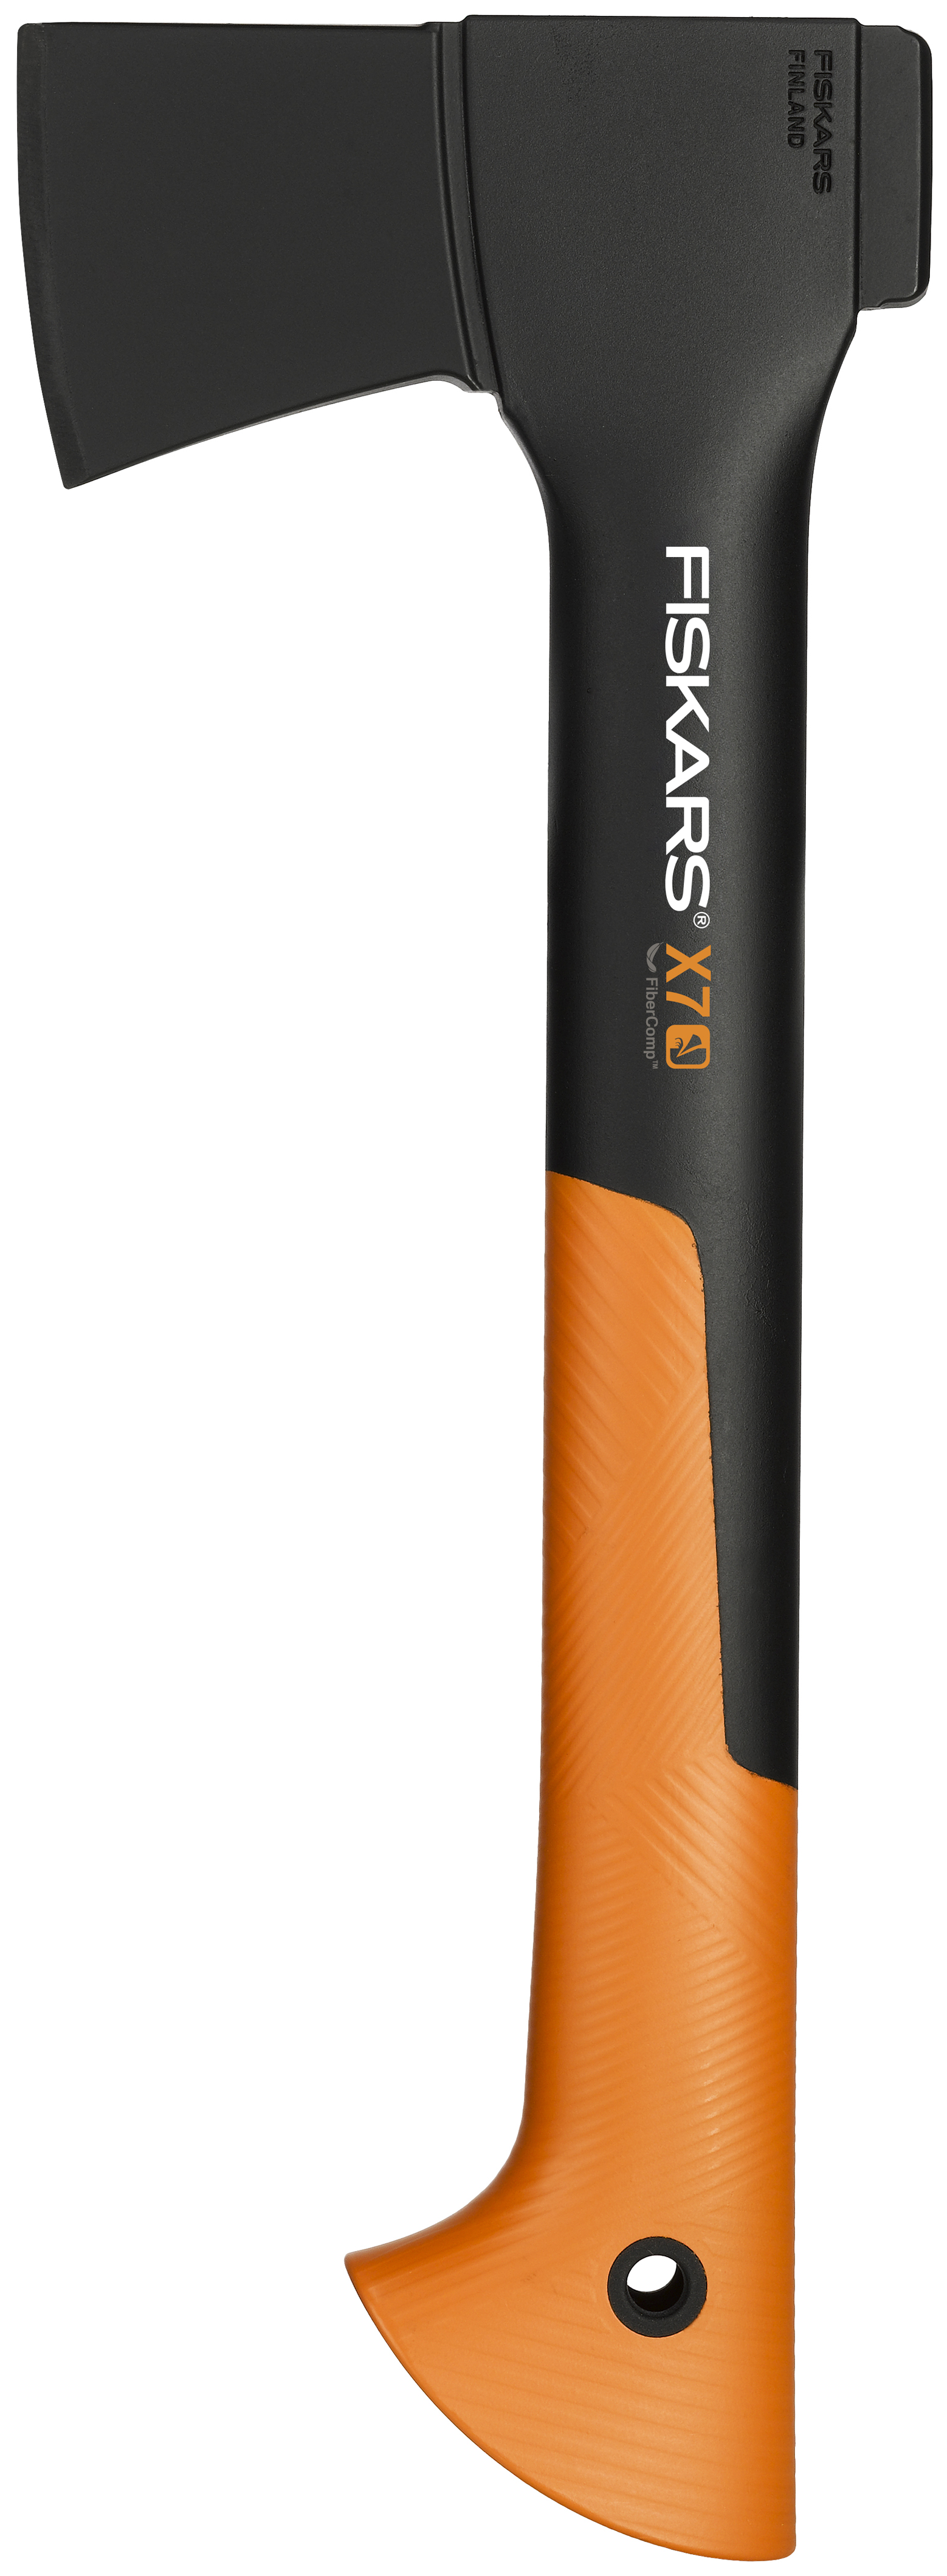 Cirvis Fiskars X 7-XS 354mm 0.64kg universalais 1201614 (6411501214232) cirvis